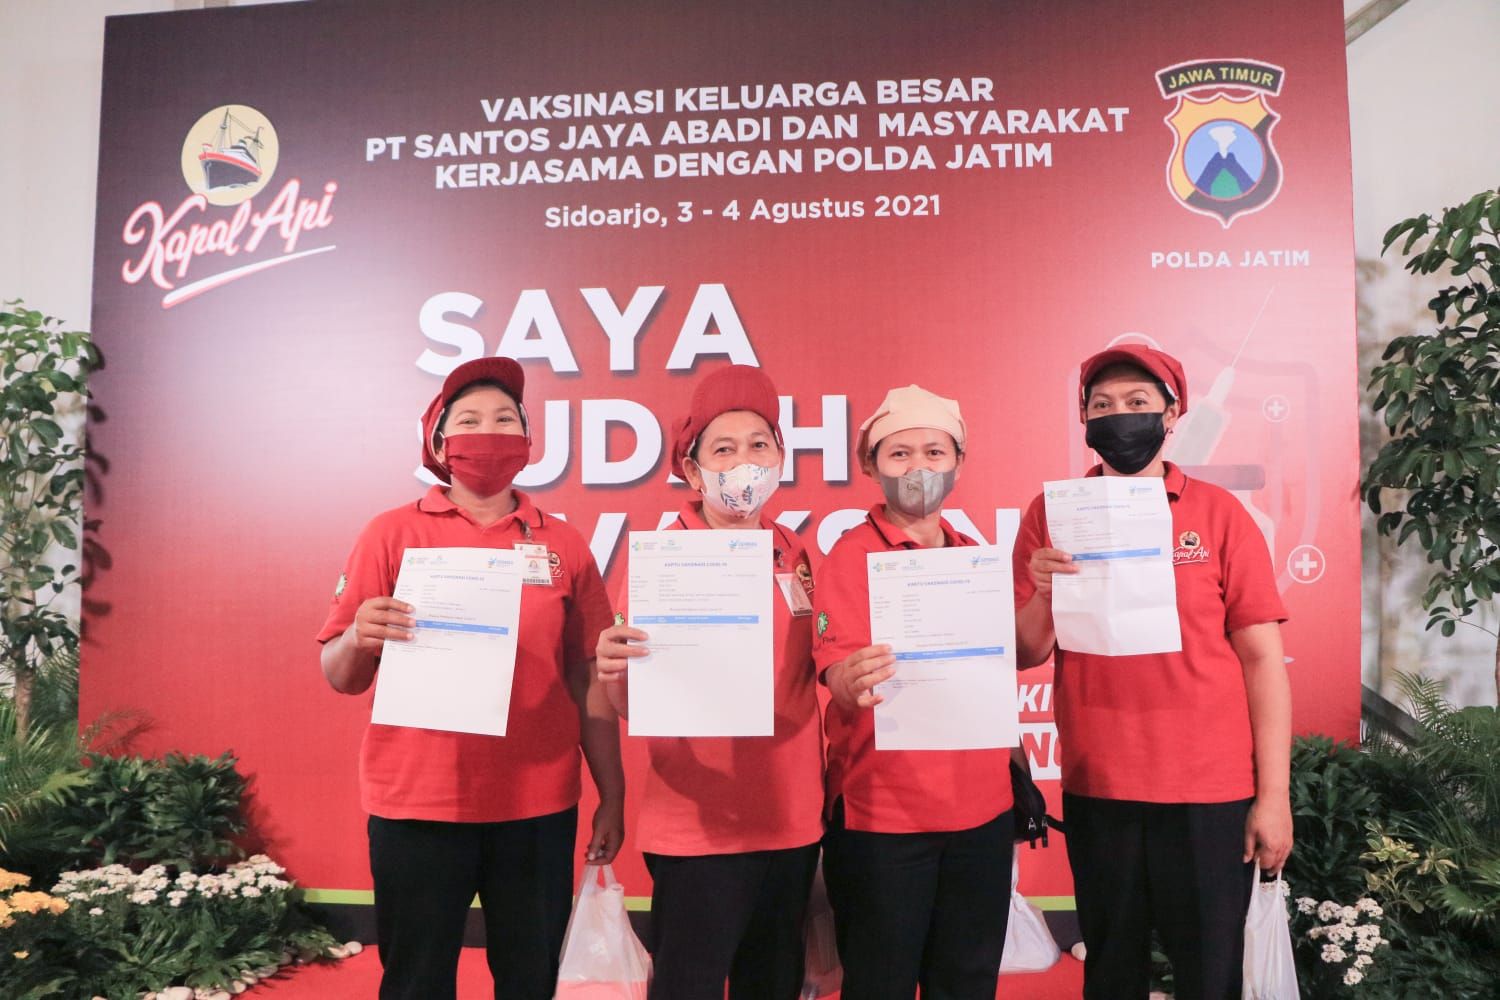 PT Santos Jaya Abadi Gelar Vaksinasi untuk Karyawan dan Masyarakat Surabaya  - Jakpus News